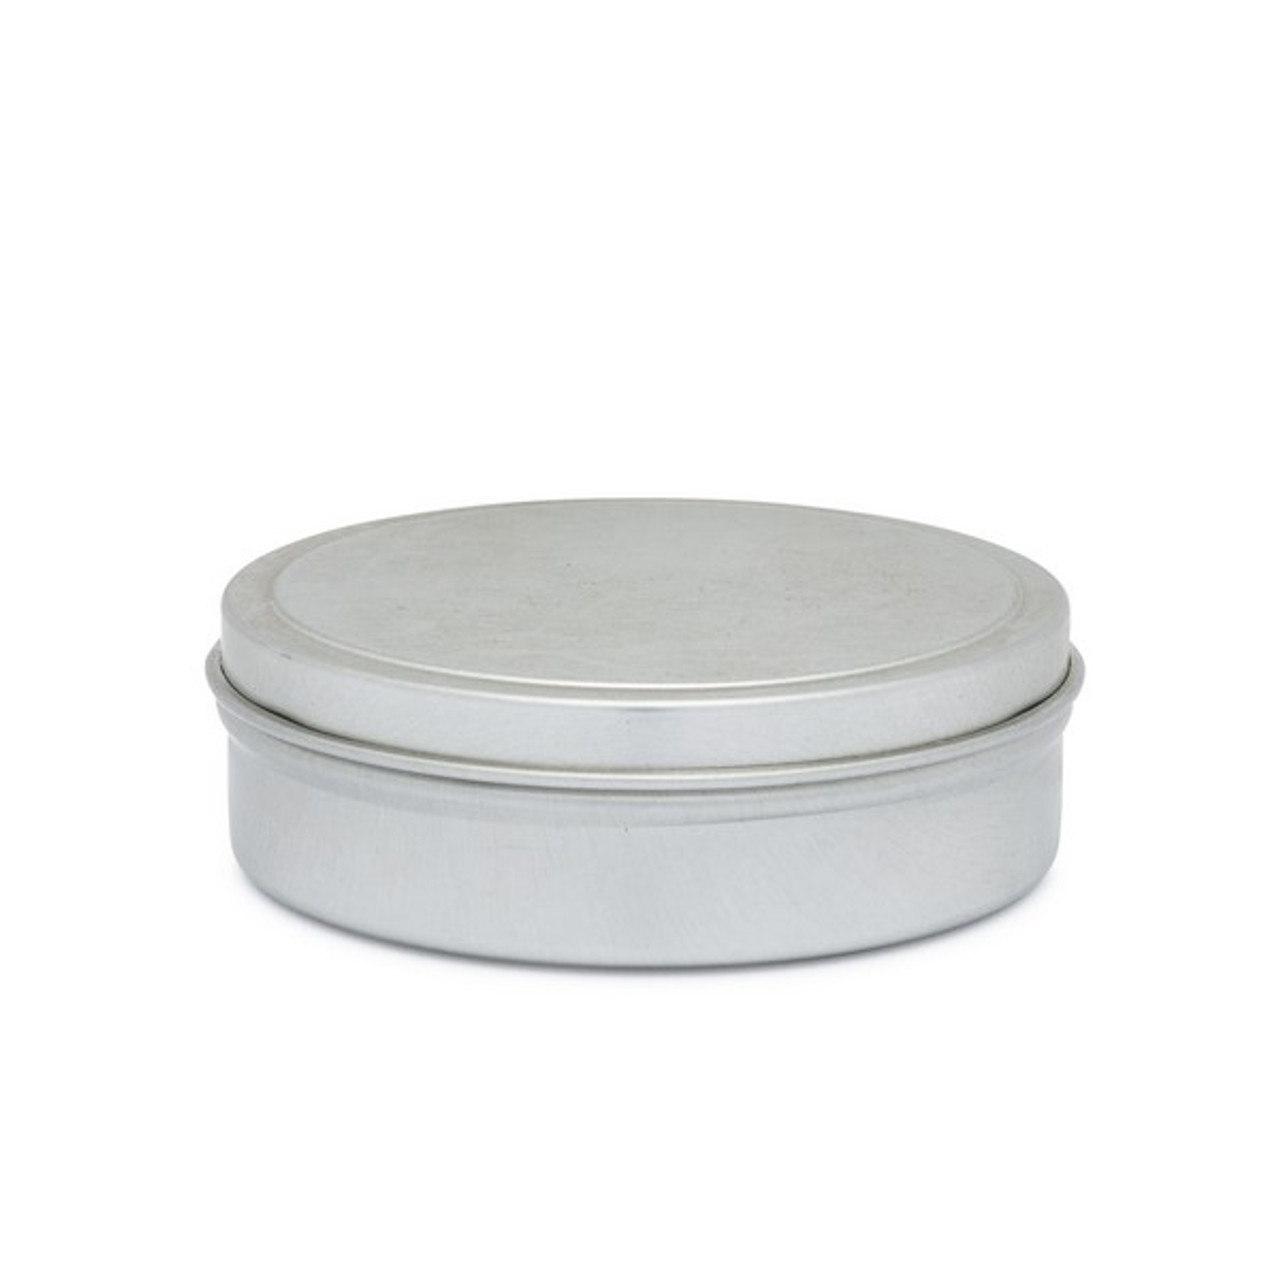 3oz Silver Seamless Tall Tins - Wholesale, 36/Case, Silver